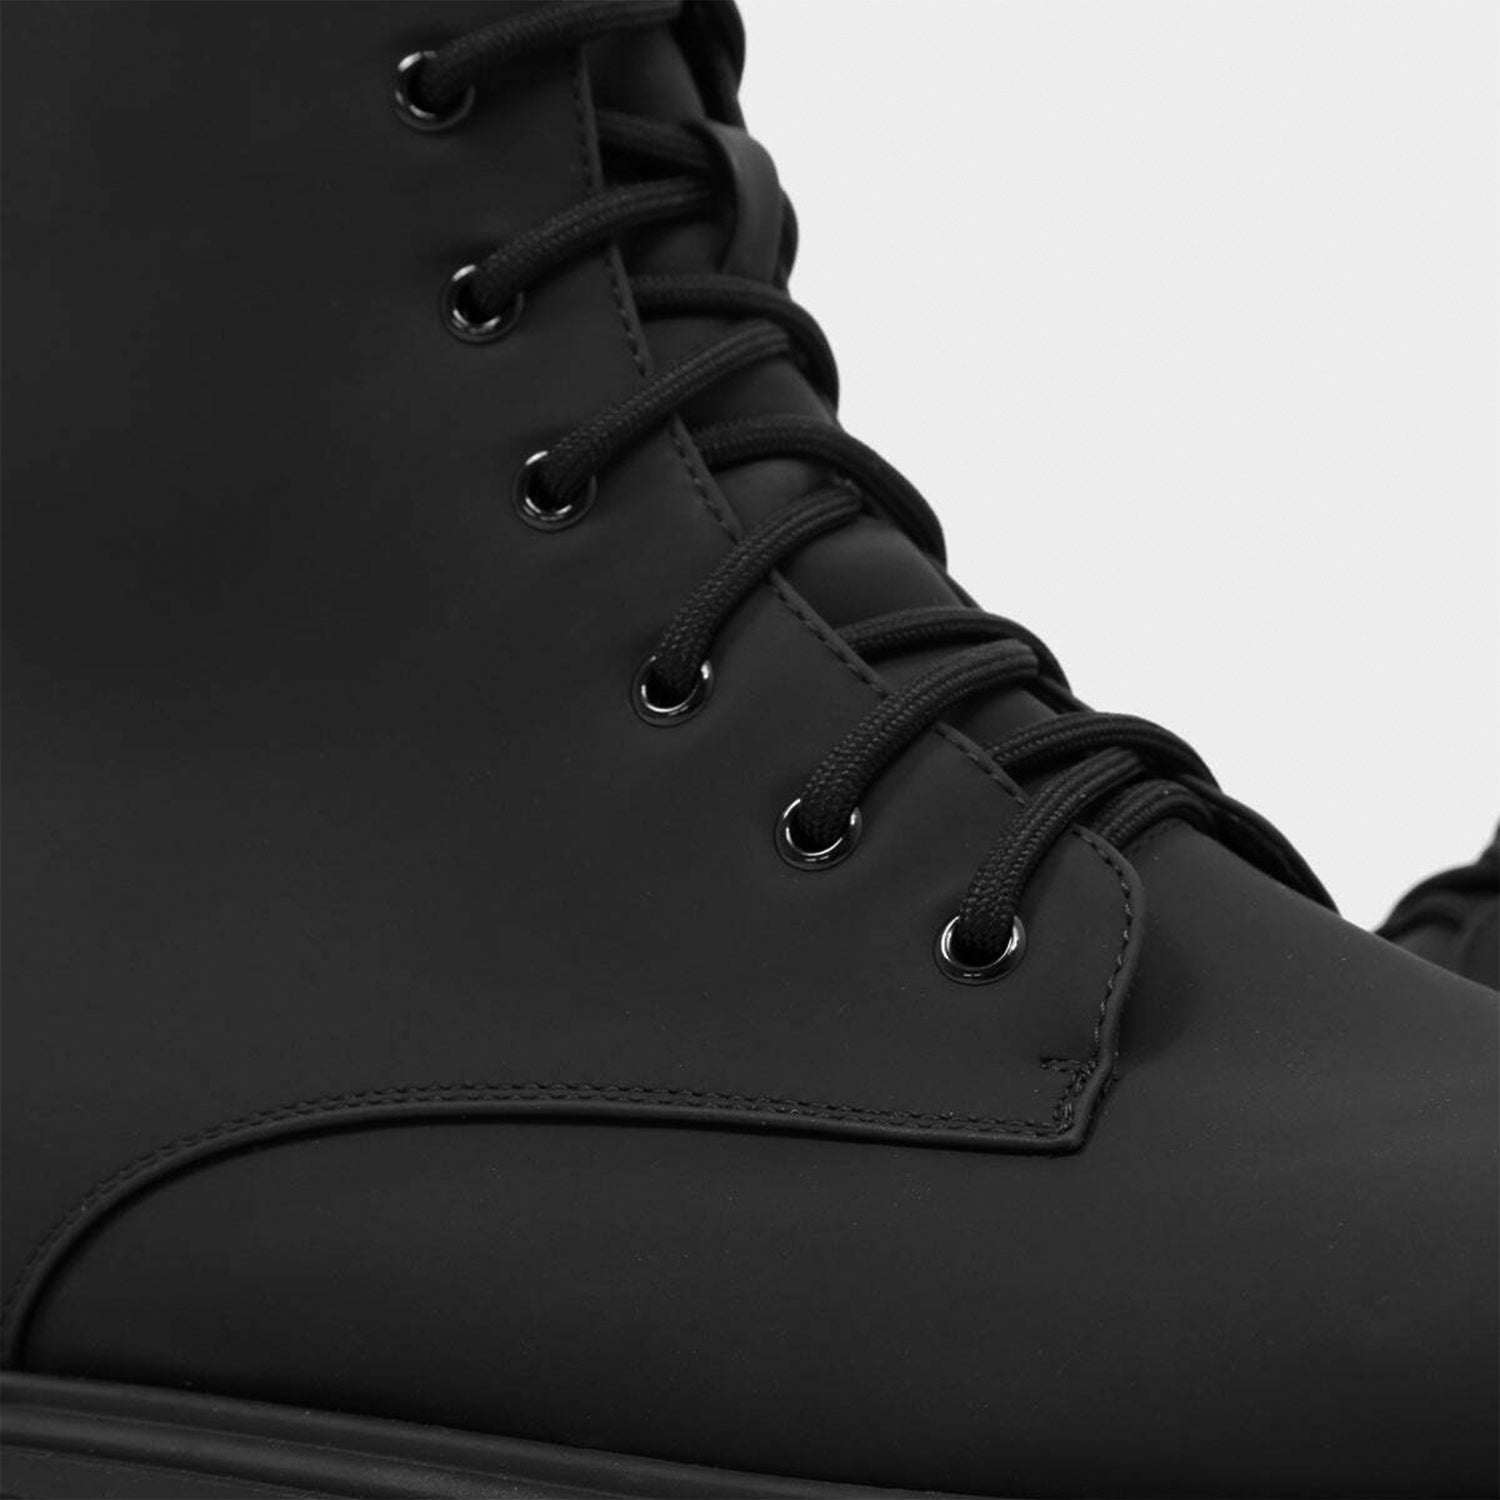 Foundry Men's Platform Ankle Boots - Ankle Boots - KOI Footwear - Black - Lace Detail